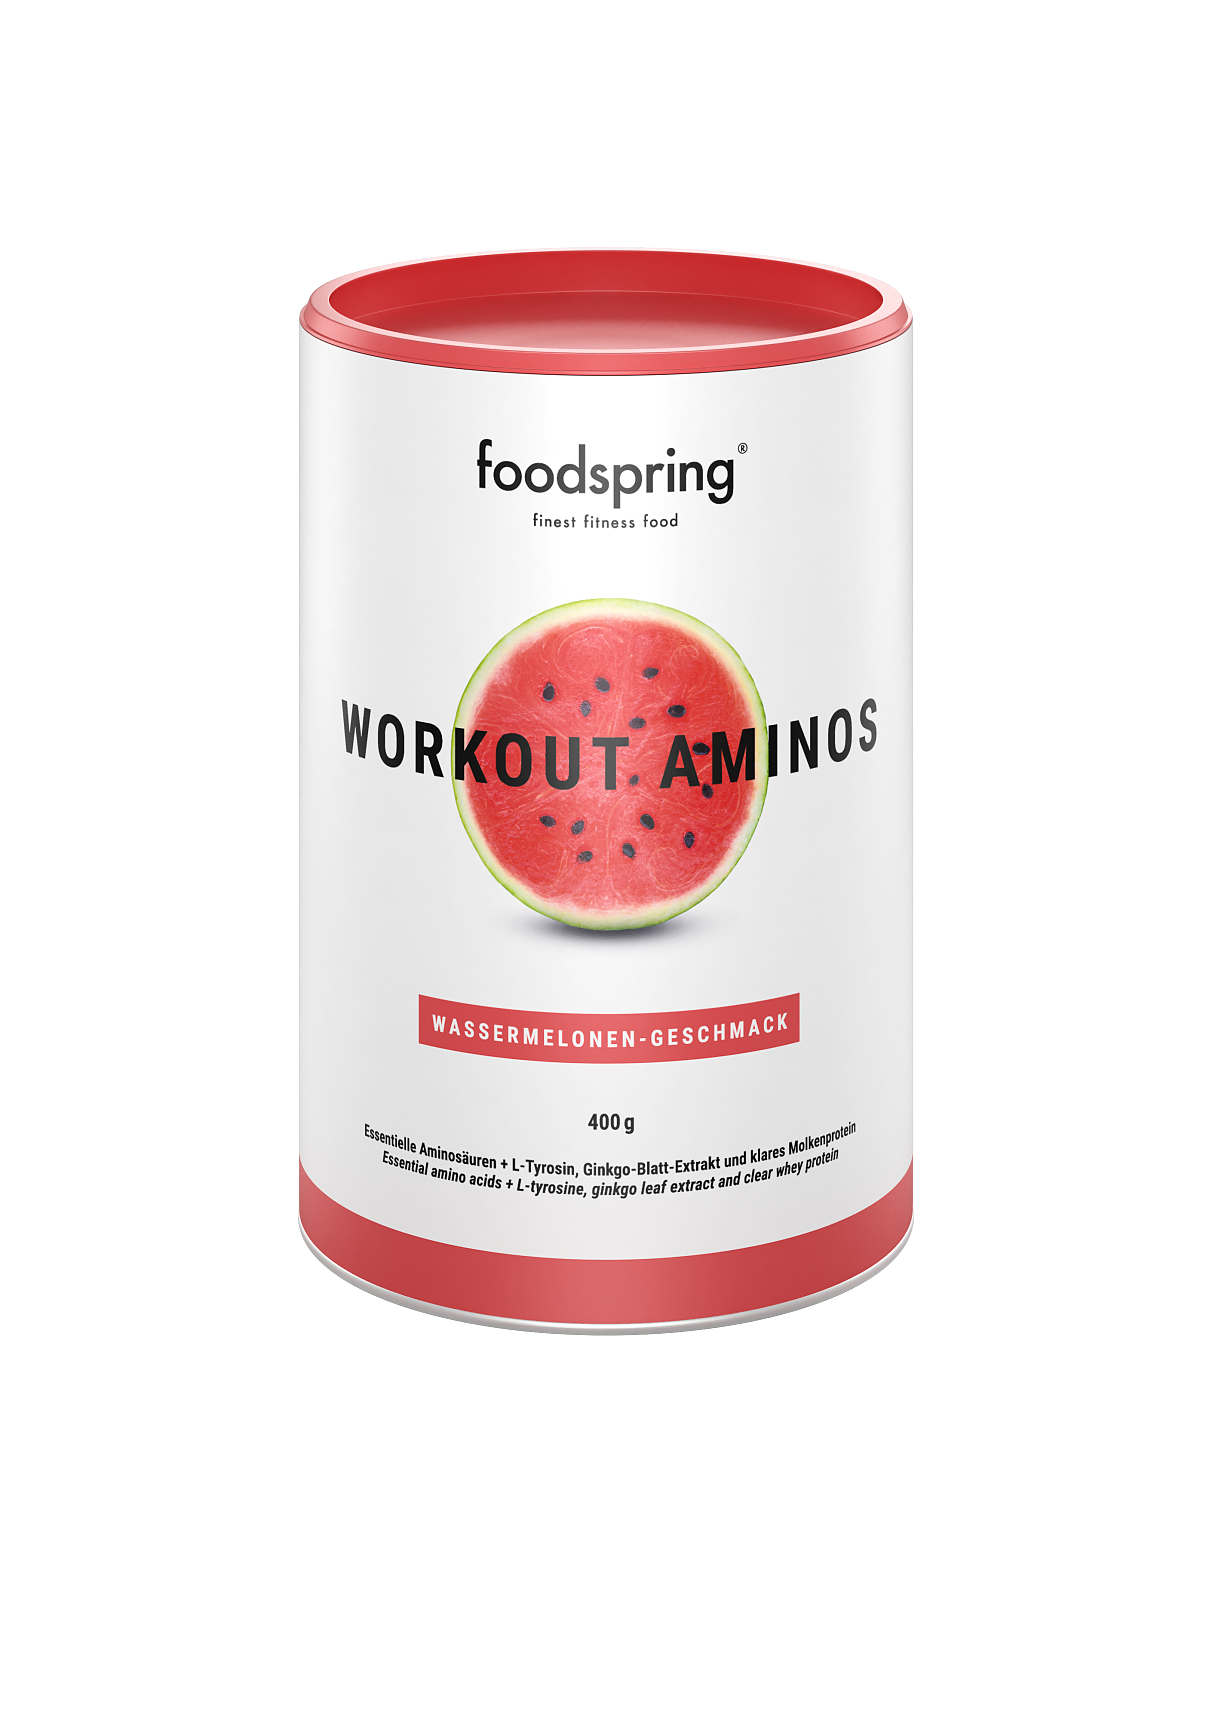 foodspring_Workout Aminos_Wassermelonen-Geschmack_EUR 36,99